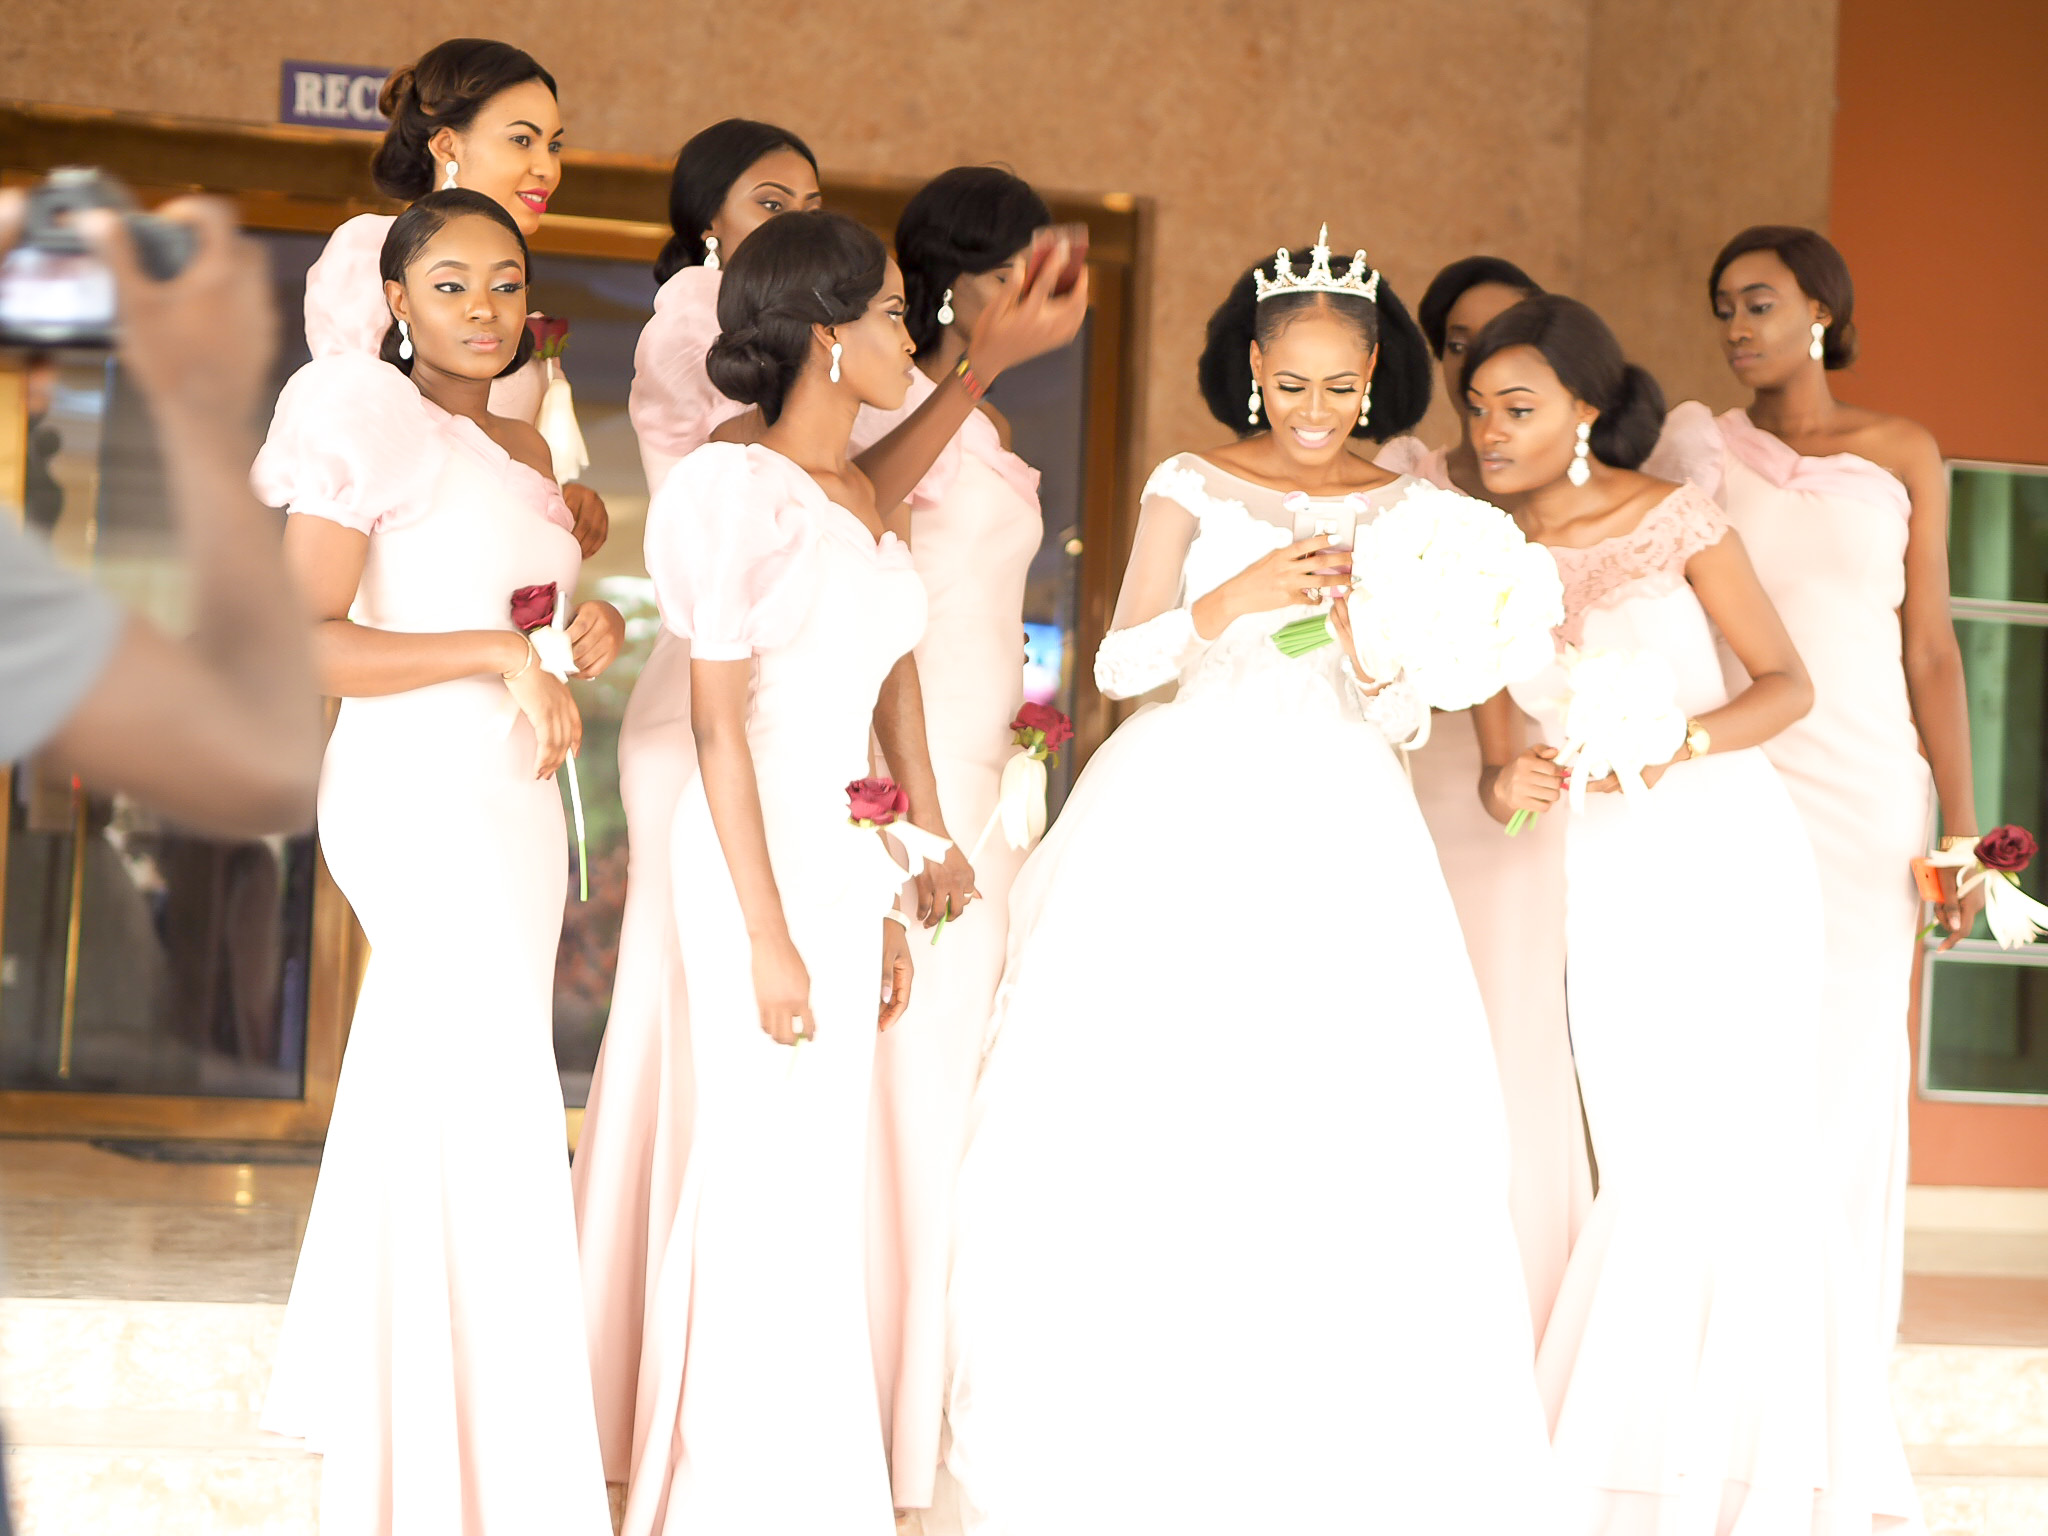 Peach colored bridesmaid dresses for Nigerian wedding inspiration